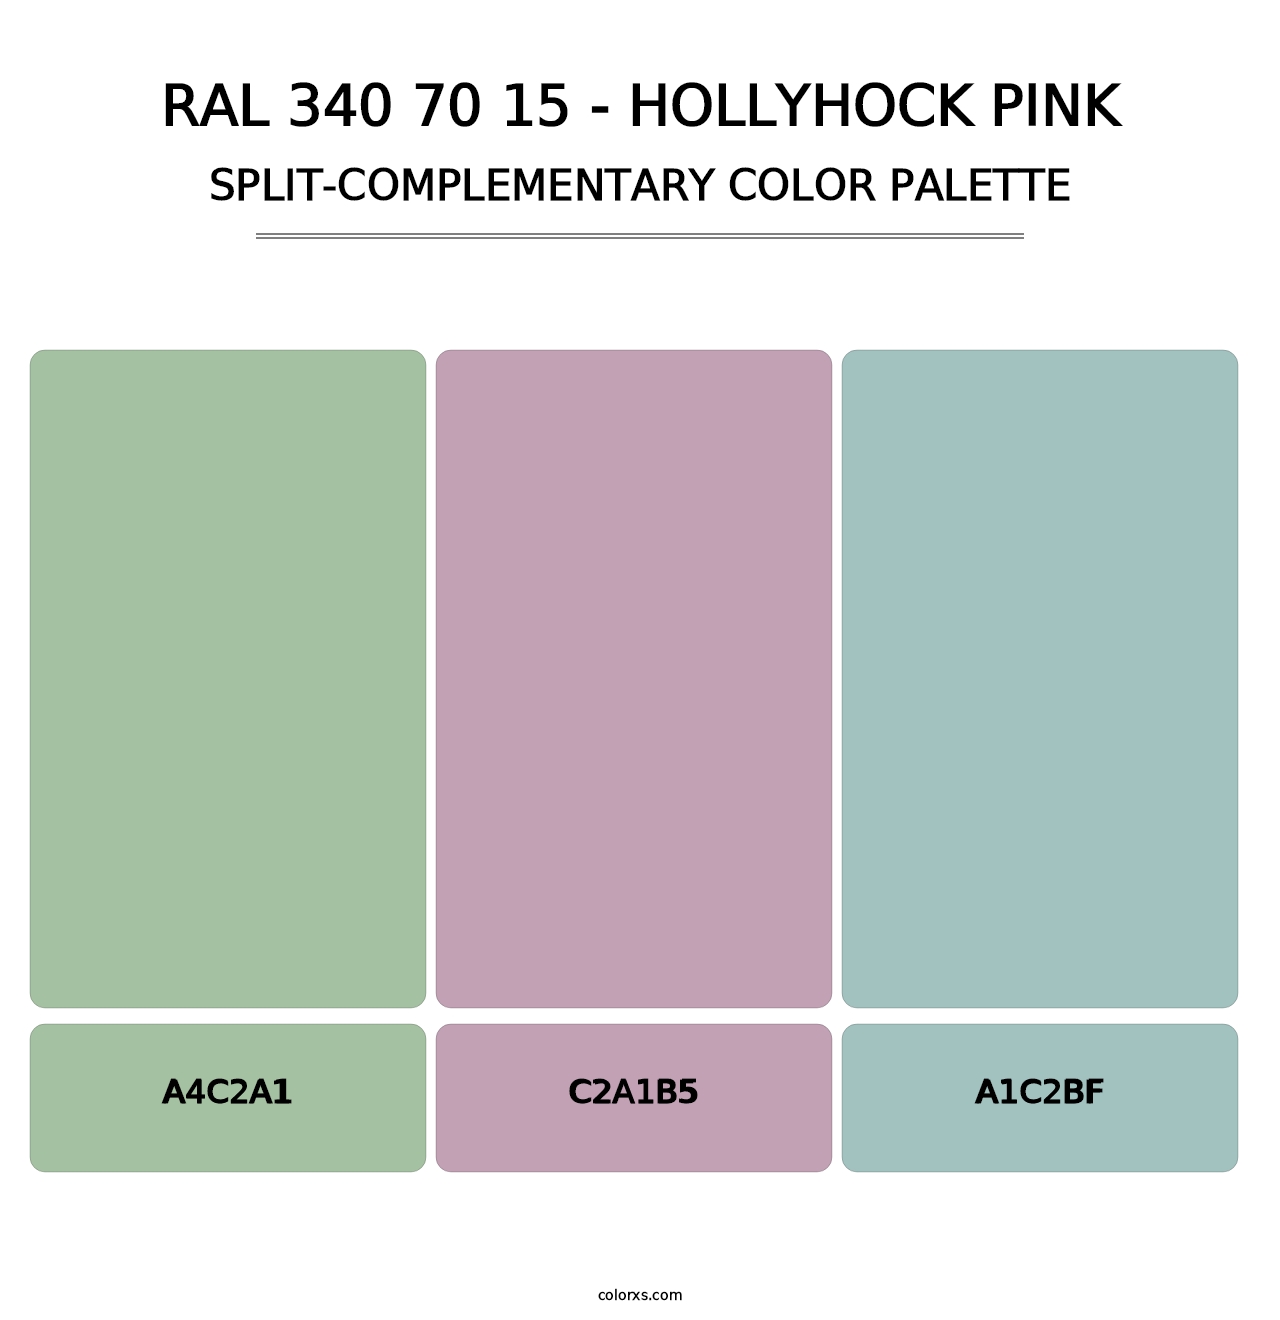 RAL 340 70 15 - Hollyhock Pink - Split-Complementary Color Palette